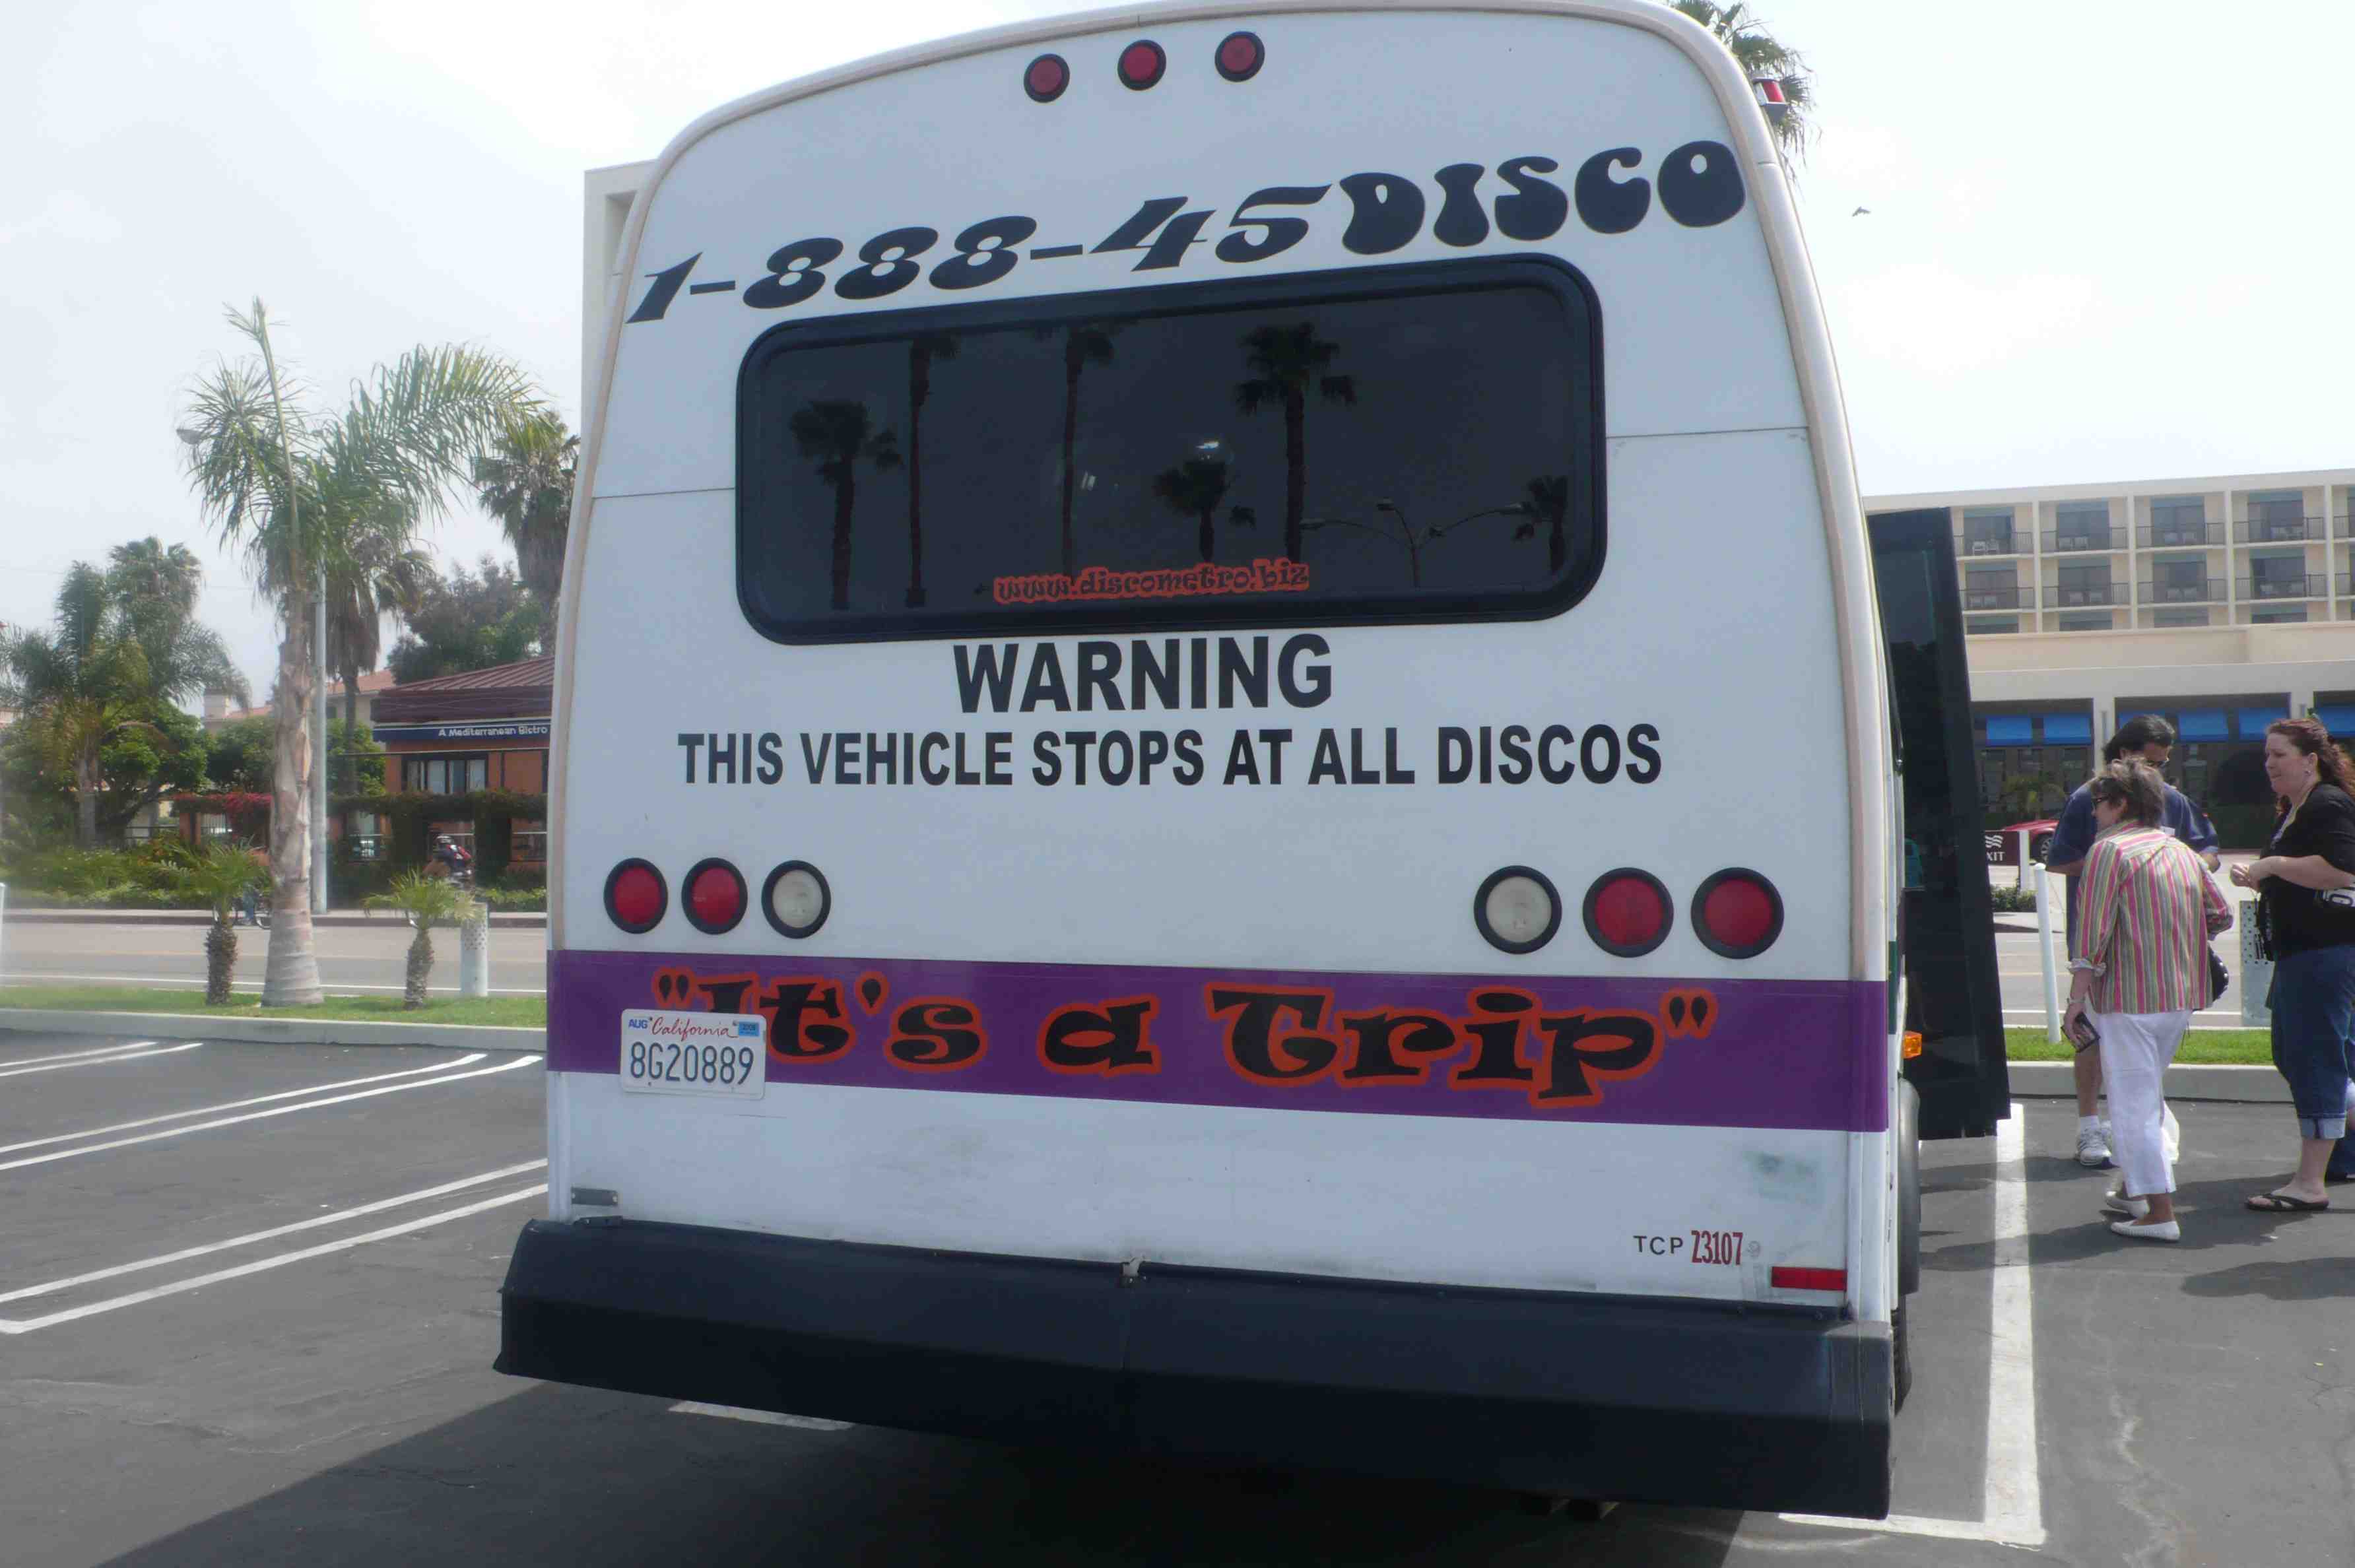 Disco bus, complete with purple leopard seats